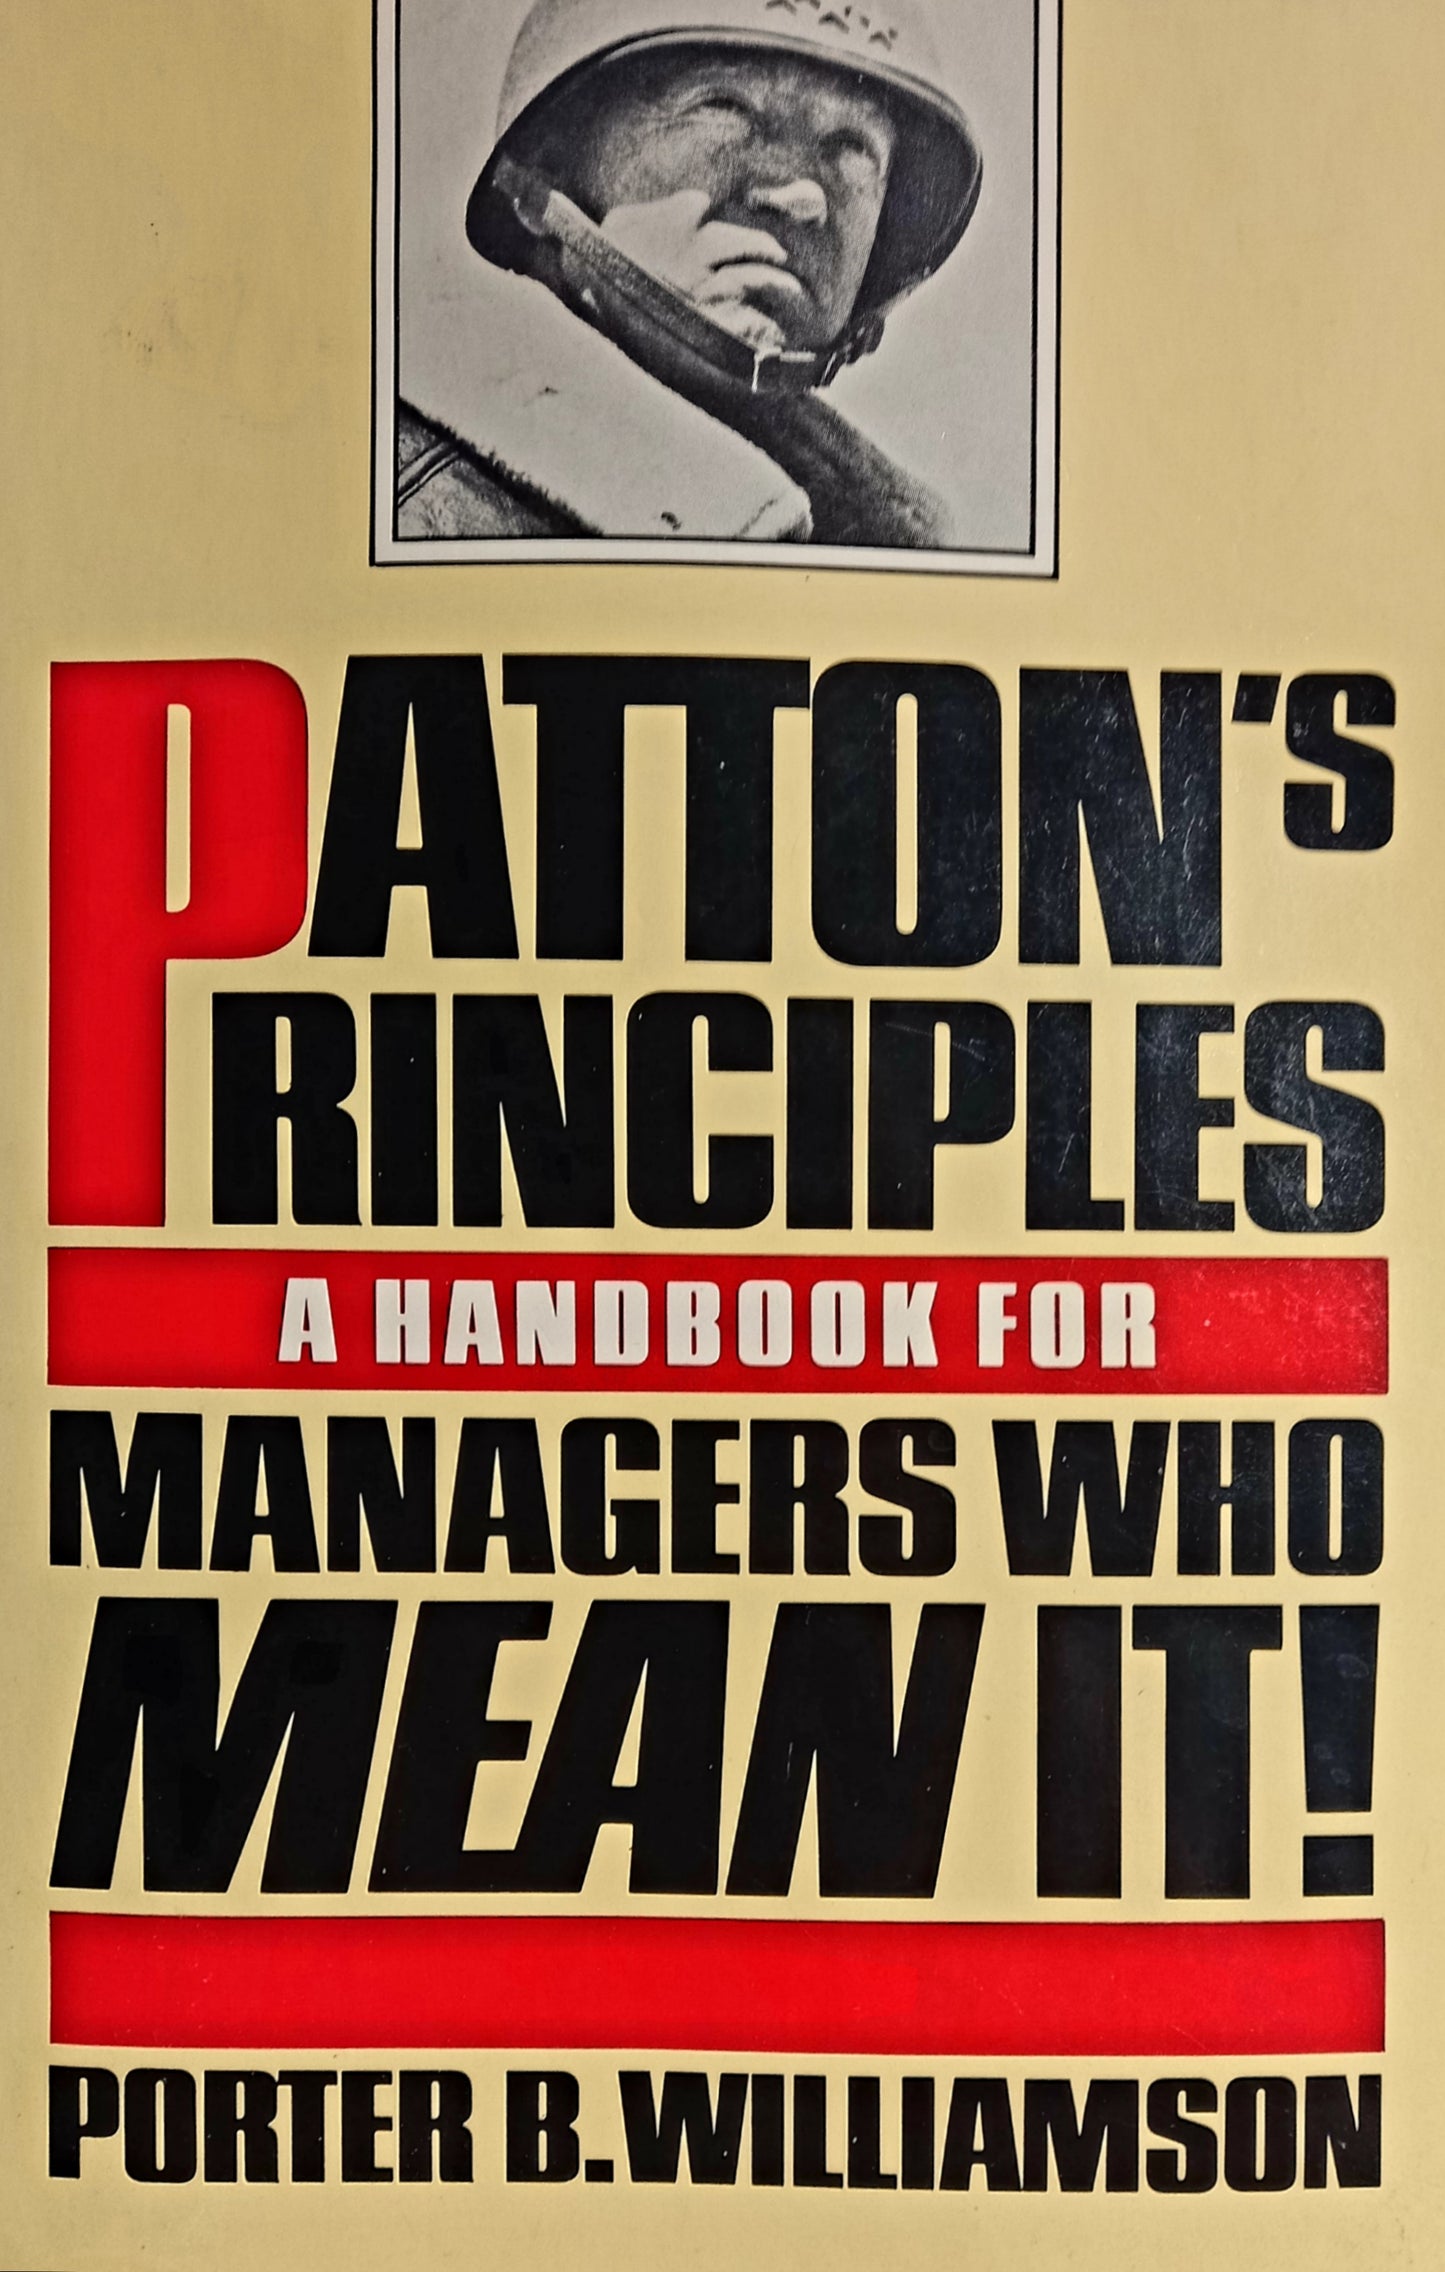 Patton's Principles